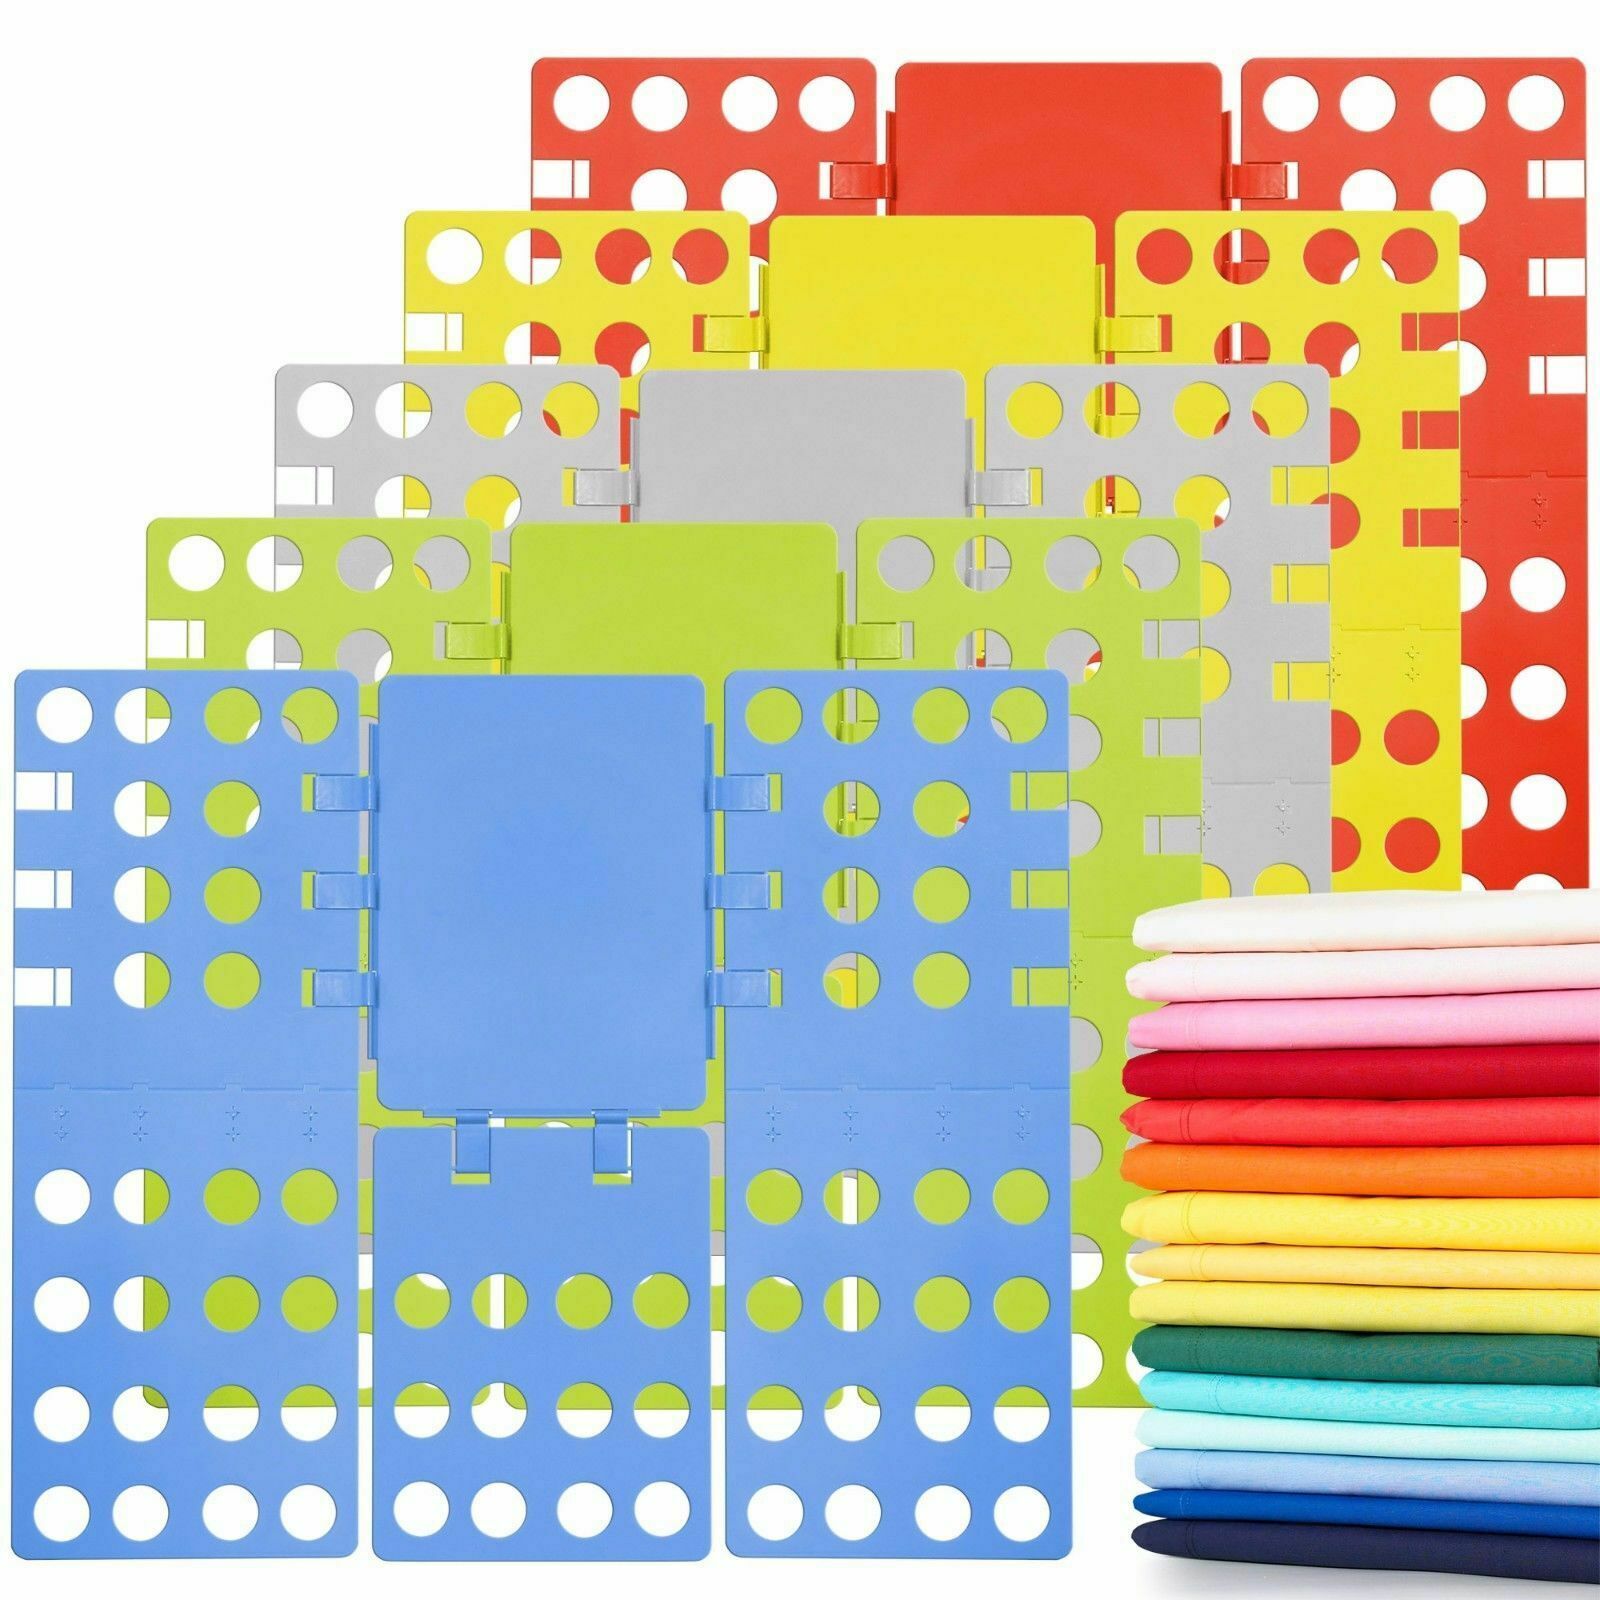 New Version V2 Clothes Folder Laundry Dress Shirt Folding Board Shirt Organizer